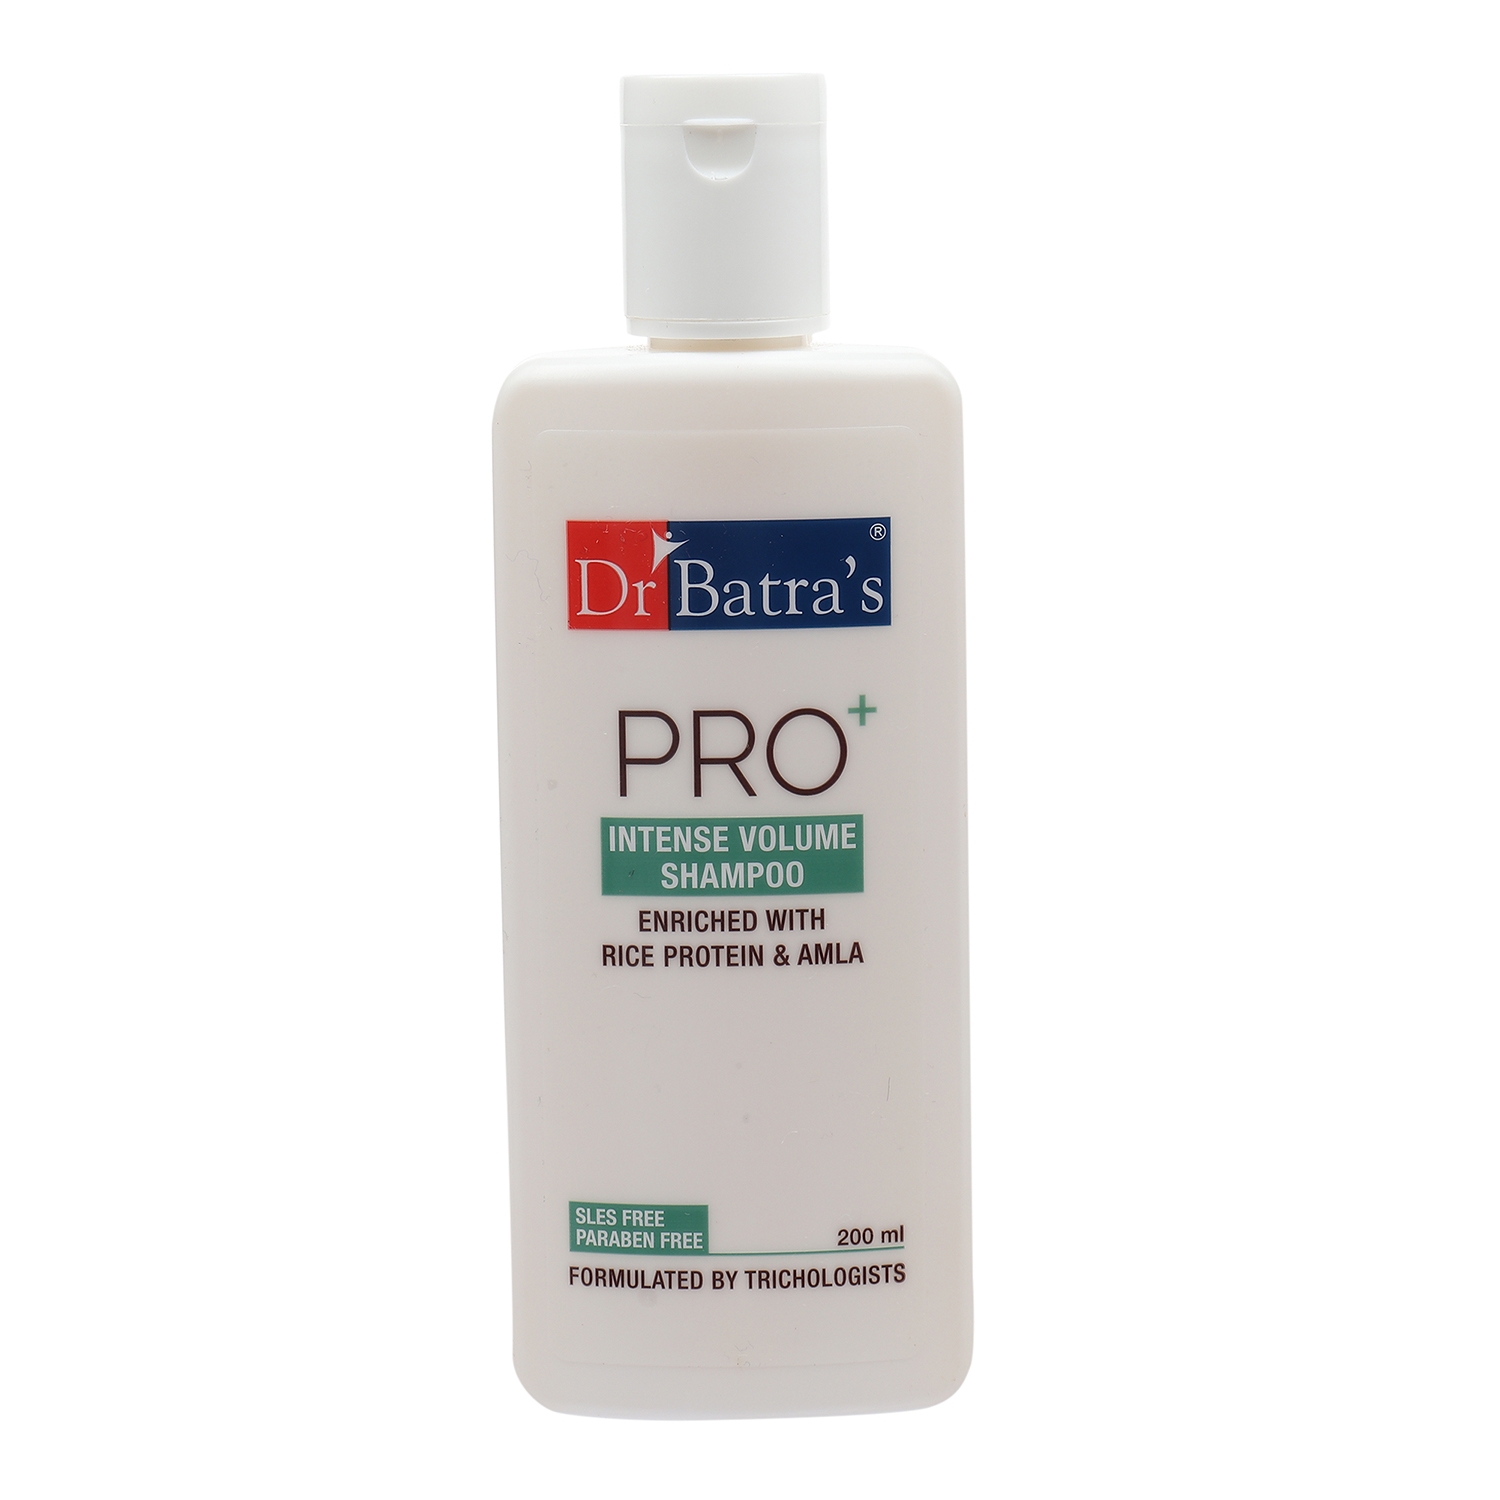 Dr Batra's | Dr Batra's Hair Fall Control Serum-125 ml, Conditioner - 200 ml and Pro+ Intense Volume Shampoo - 200 ml